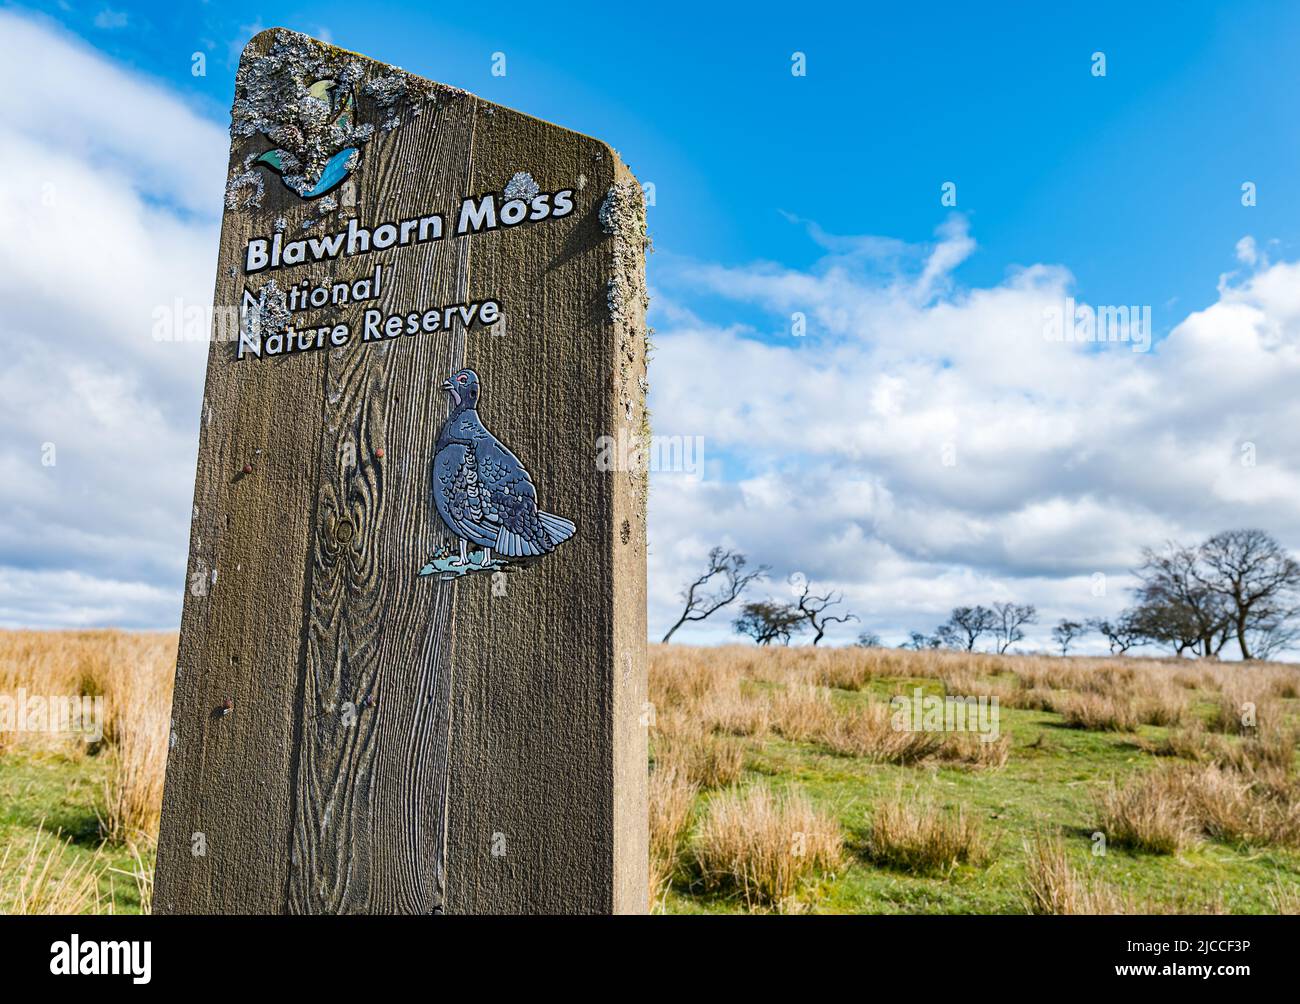 Namensschild im Blawhorn Moss National Nature Reserve, West Lothian, Schottland, Großbritannien Stockfoto